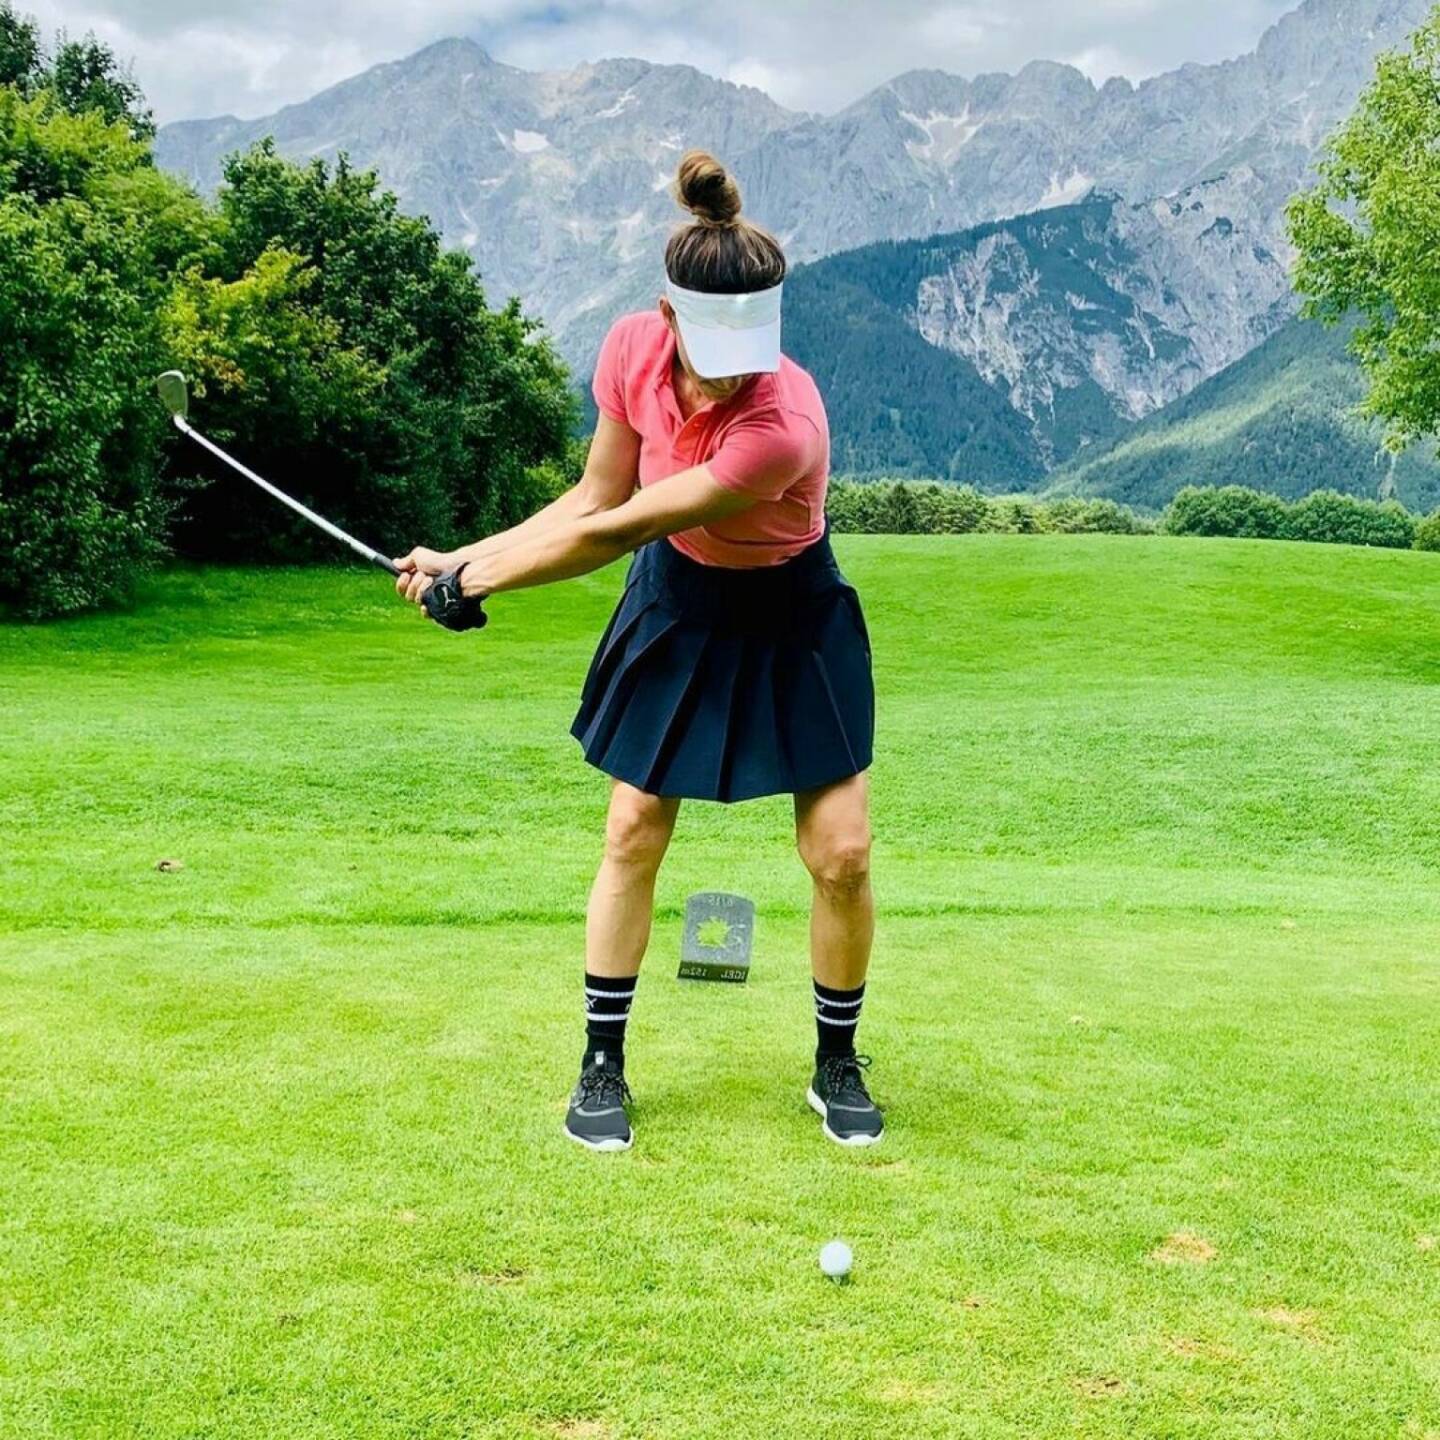 Lisa Makas - Golf - Schlag
lisa_makas
🏌🏽‍♀️⛰ ❤️
#summervibes #tirol #mountains #enjoy #austria🇦🇹
Von: https://www.instagram.com/lisa_makas/ Lisa Makas ÖFB-Damen